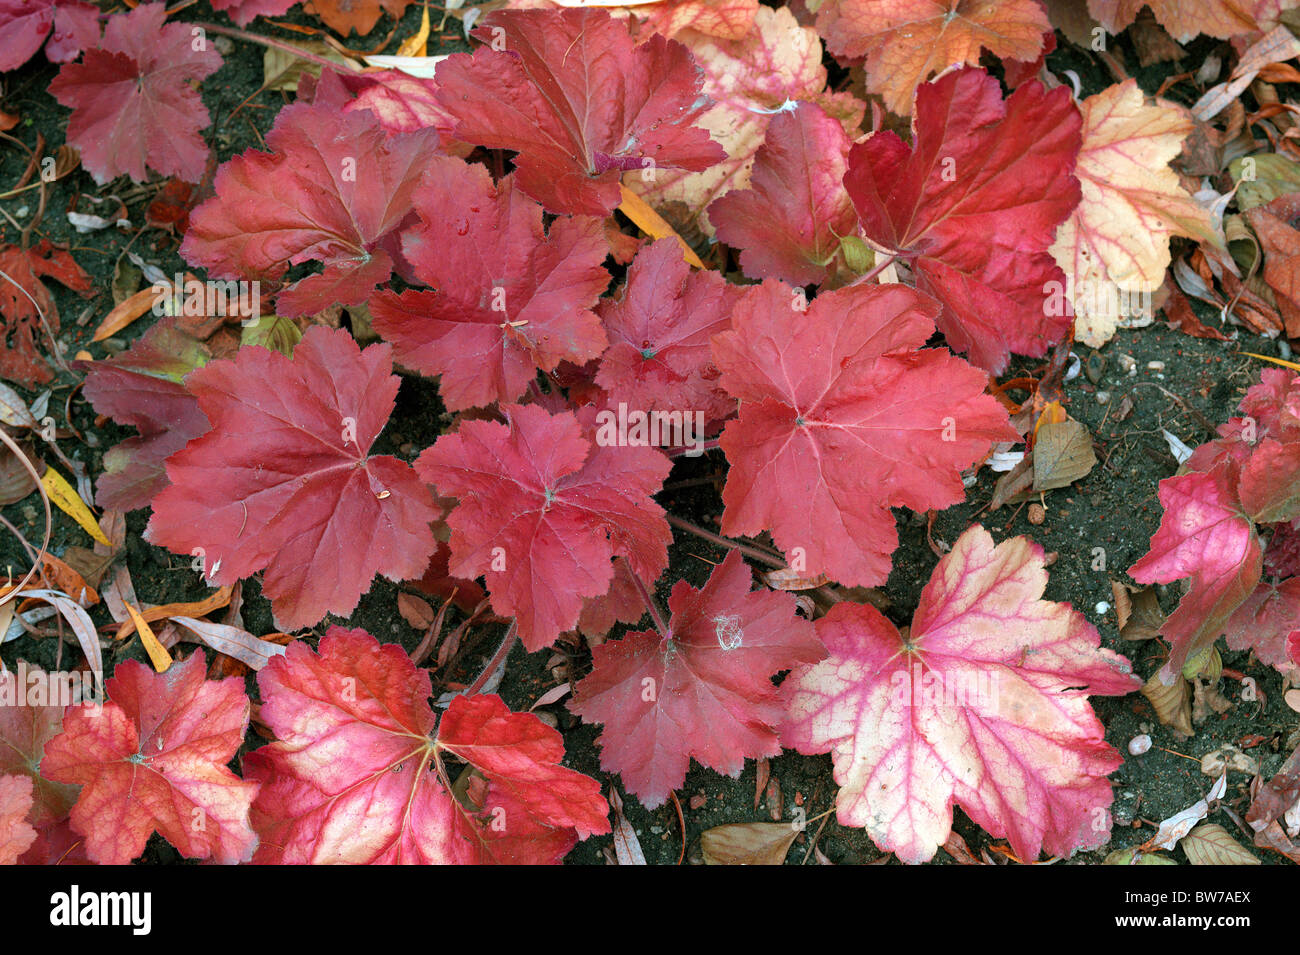 Heuchera red autumn leaves foliage Stock Photo